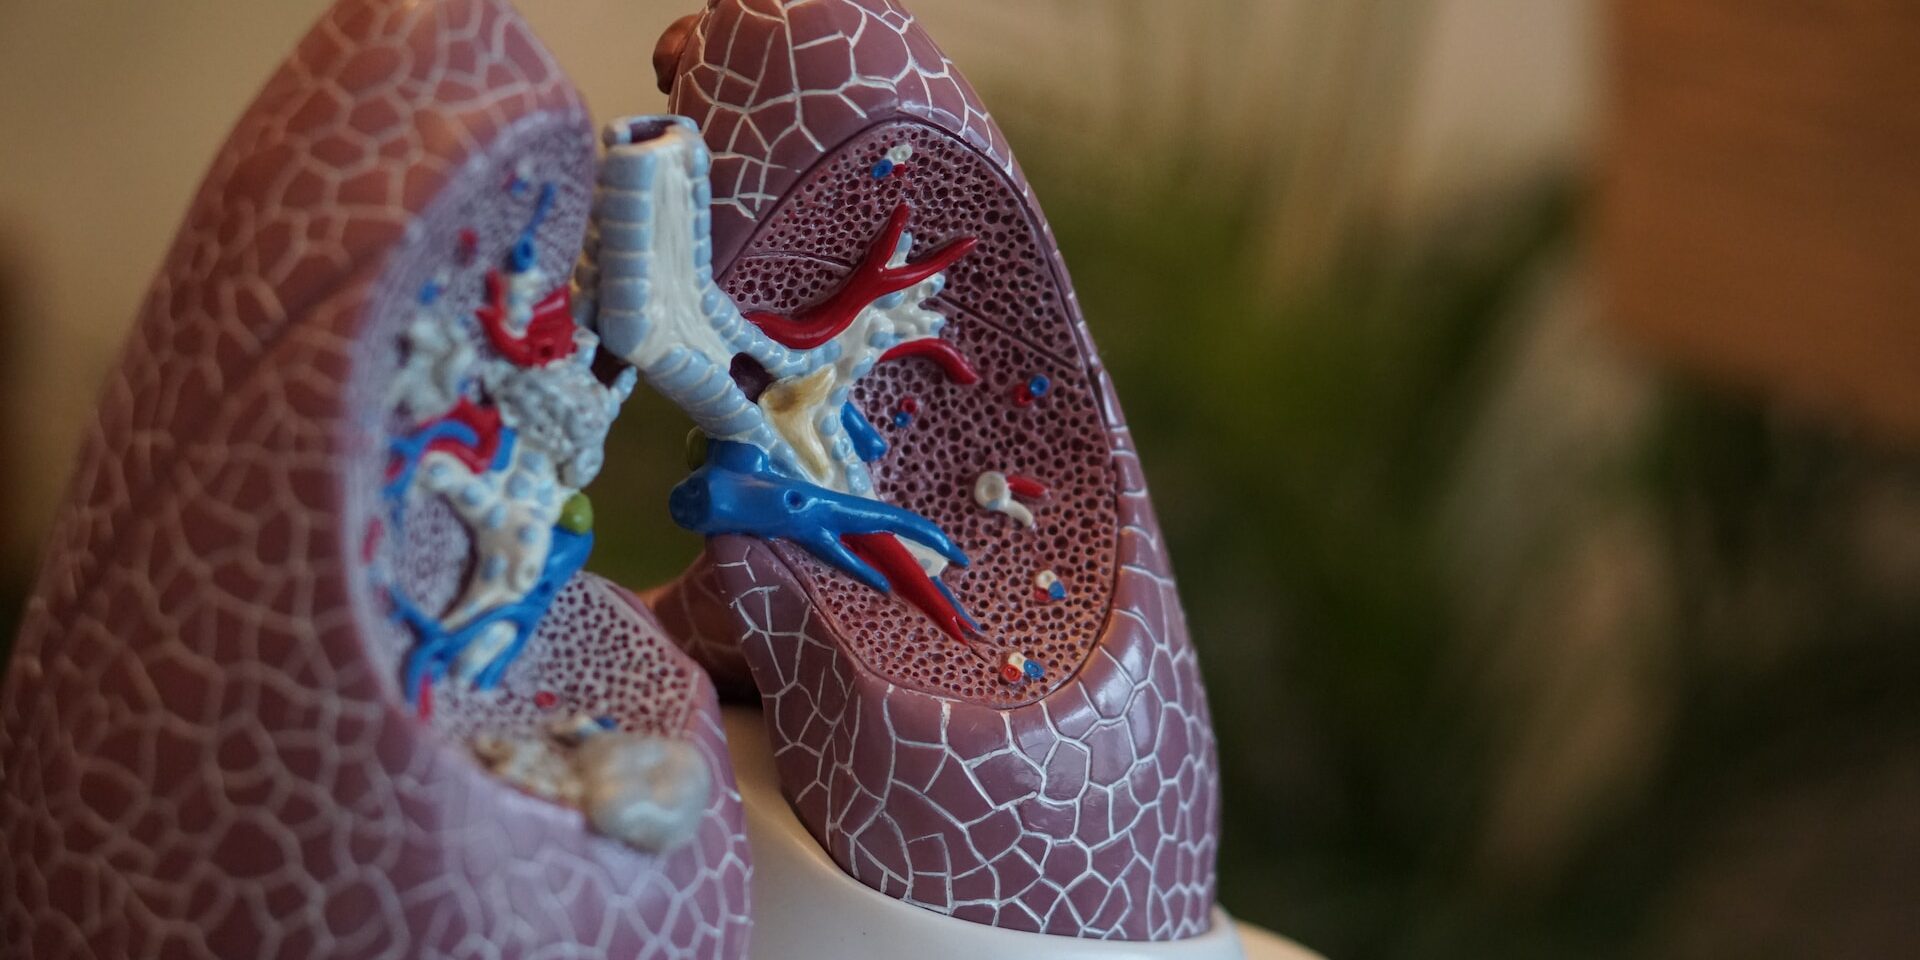 Screening cancro al polmone